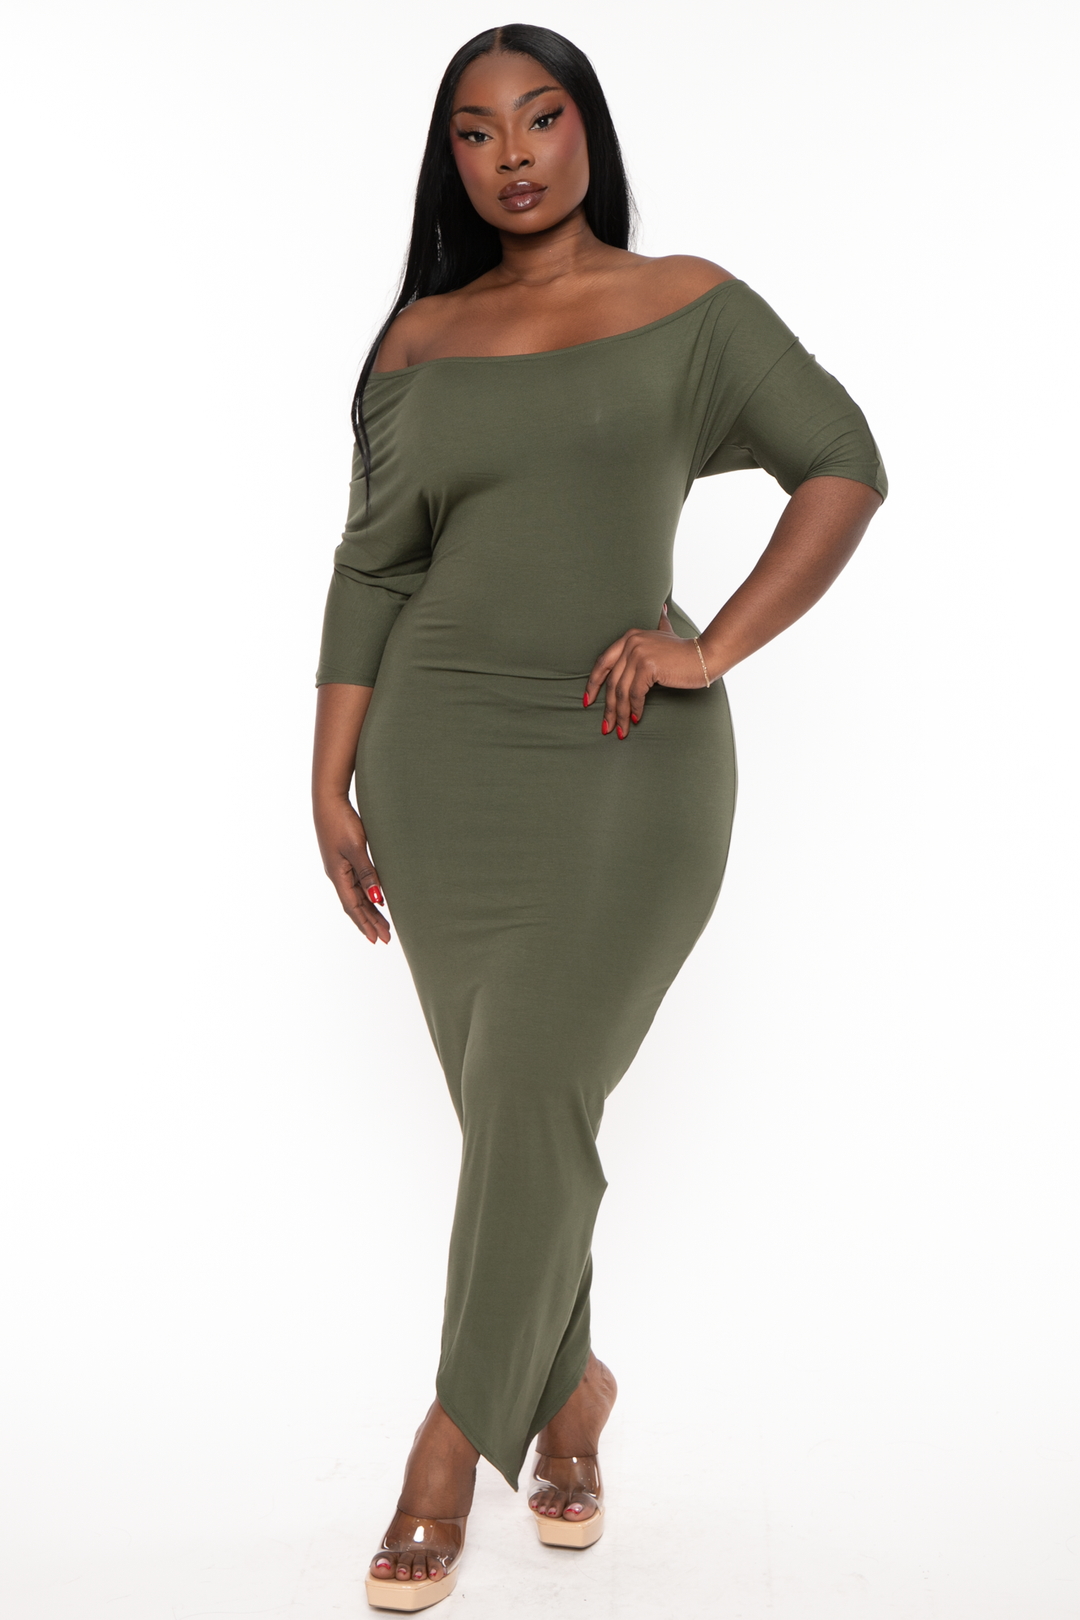 Curvy Sense Dresses 1X / Olive Plus Size Asymmetric Knit Dress - Olive